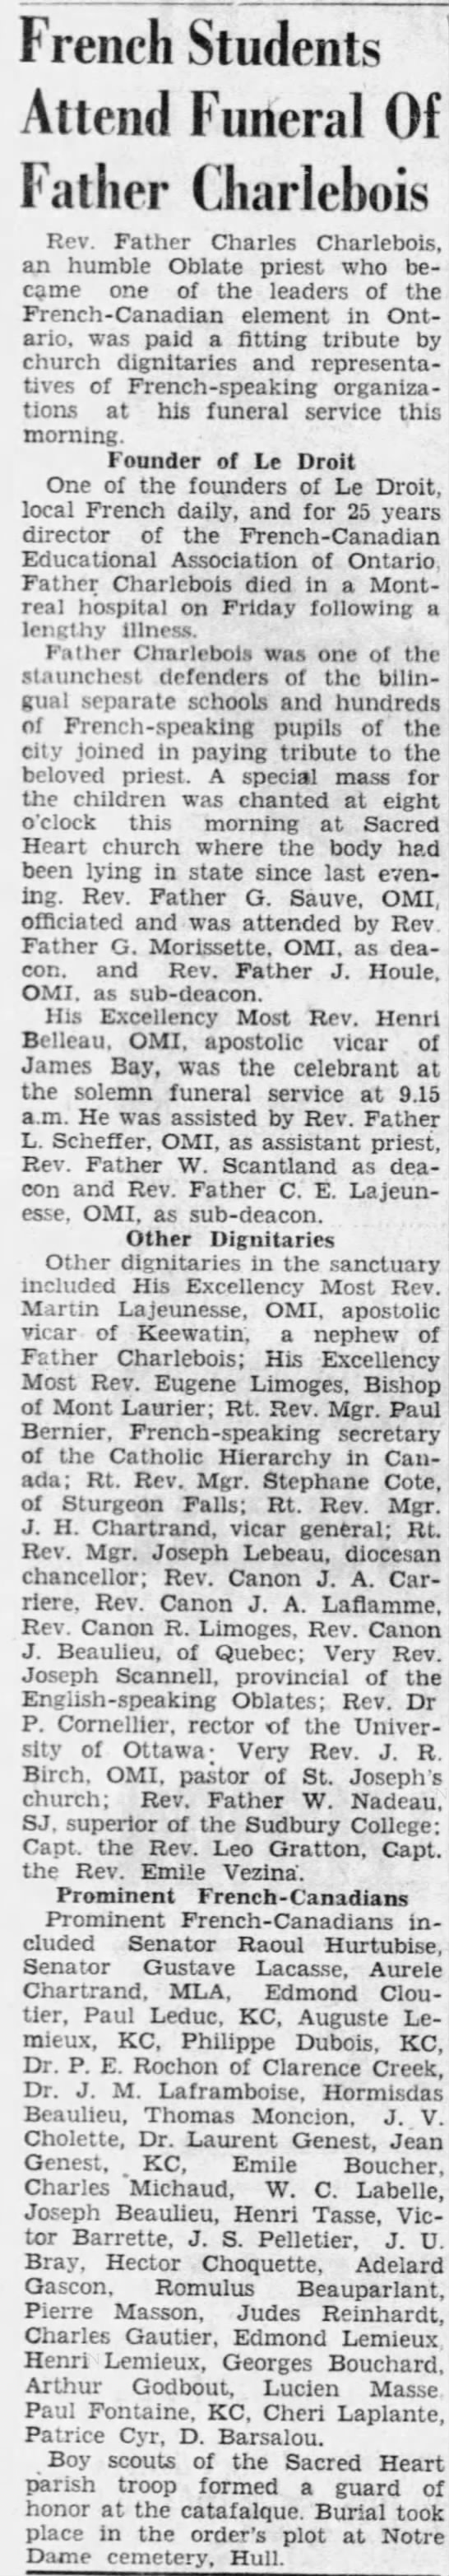 Funeral of Rev Charles Charlebois - 